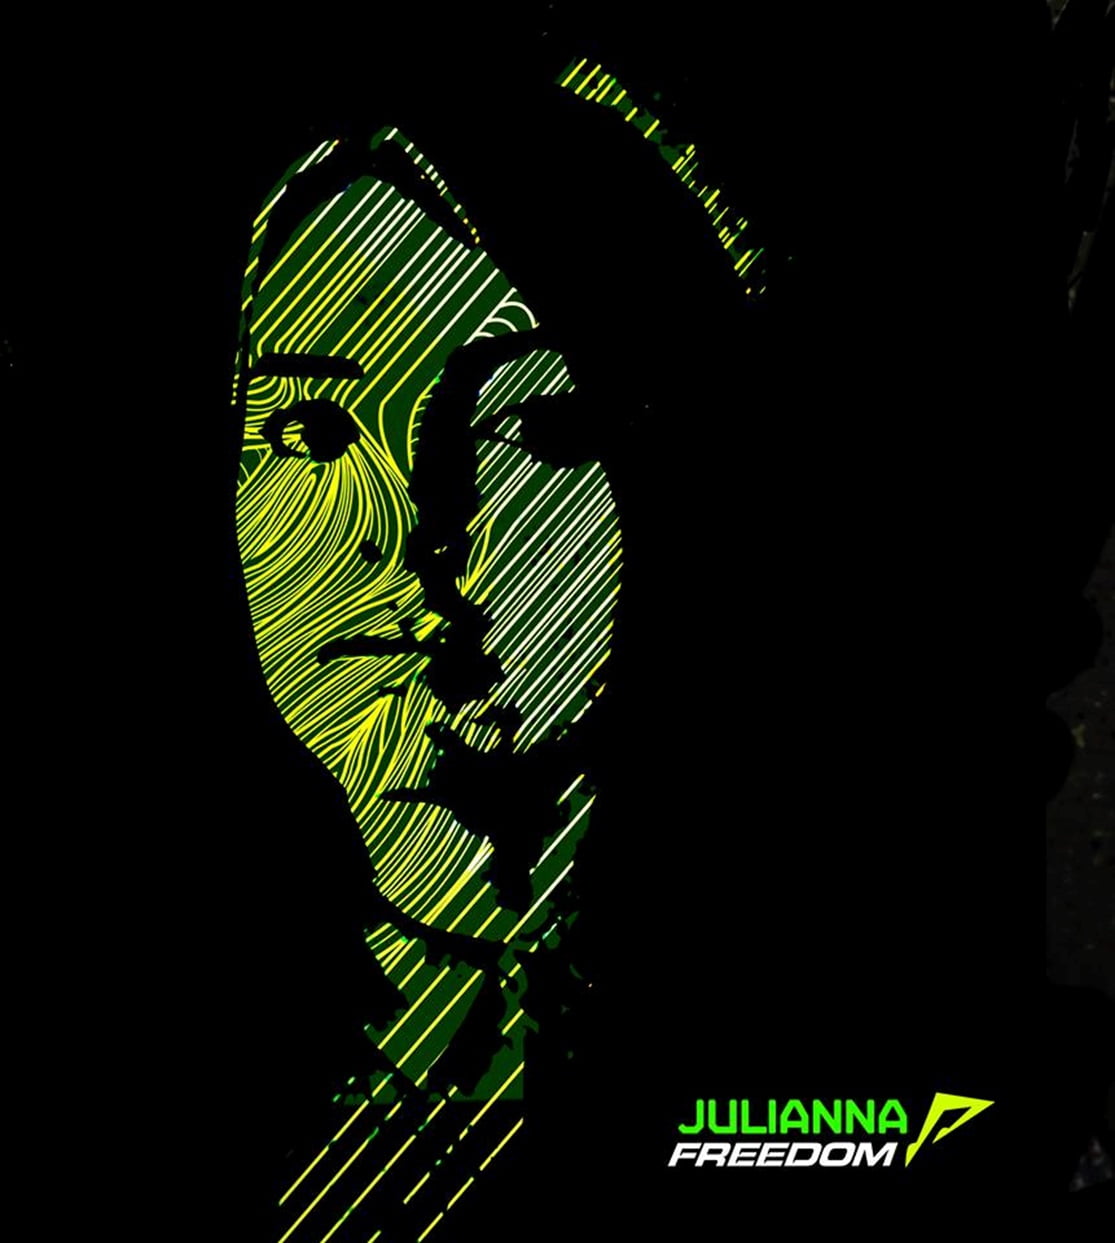 Julianna en el FREEDOM 2019